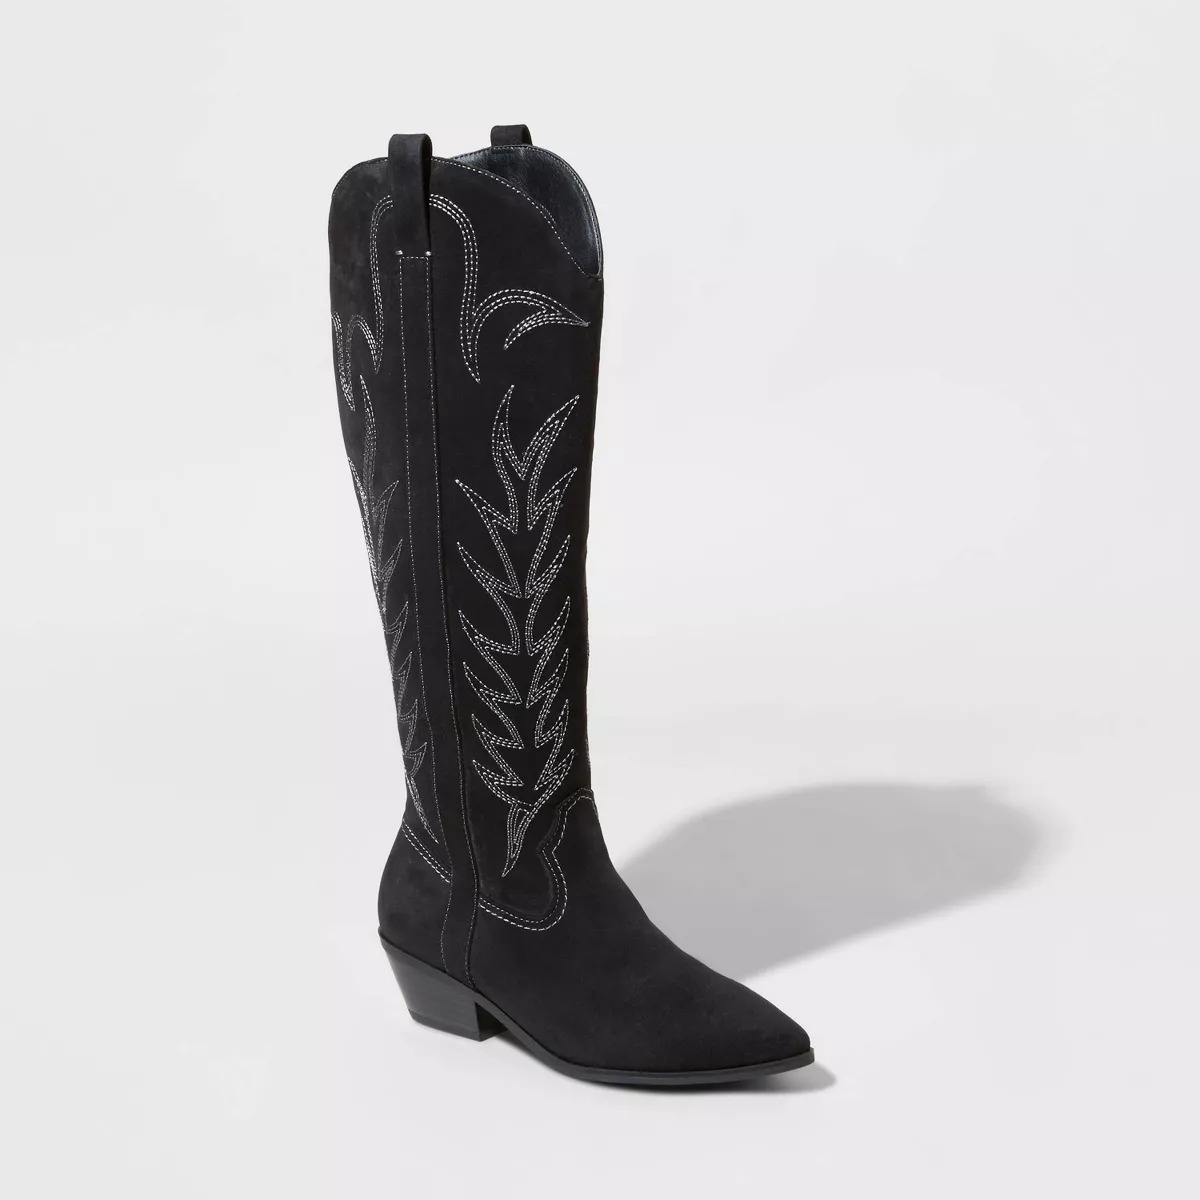 tall black western boots